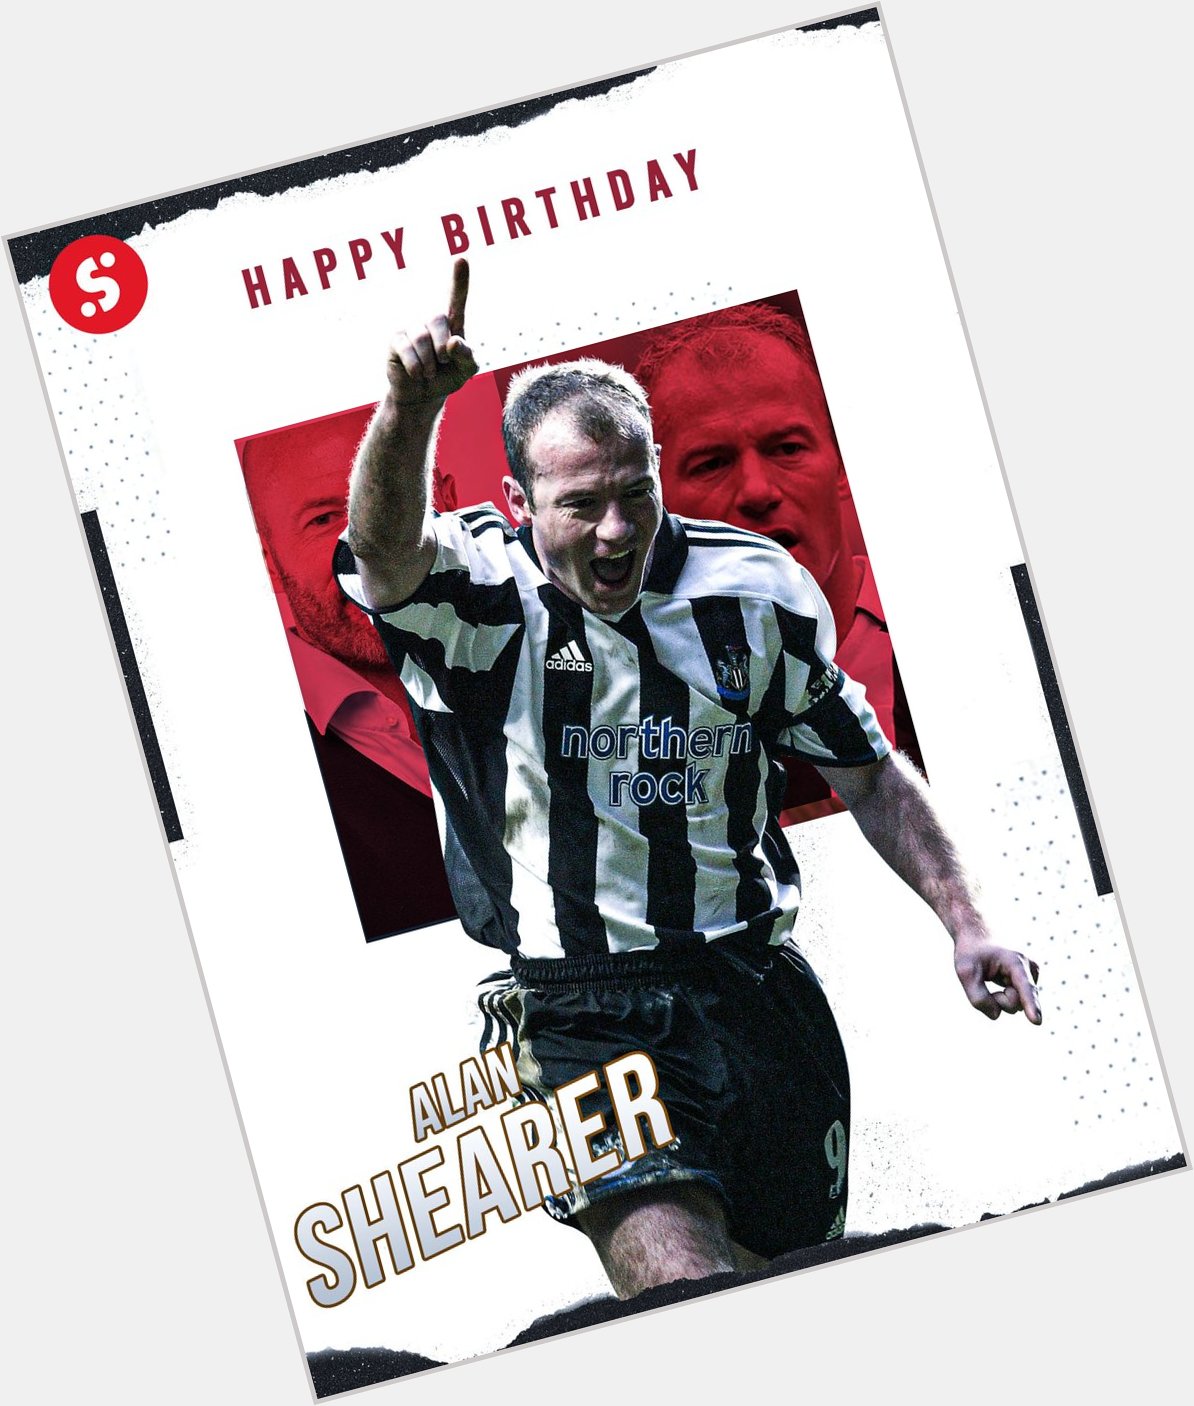 Happy 5  2  nd Birthday Alan shearer!!    